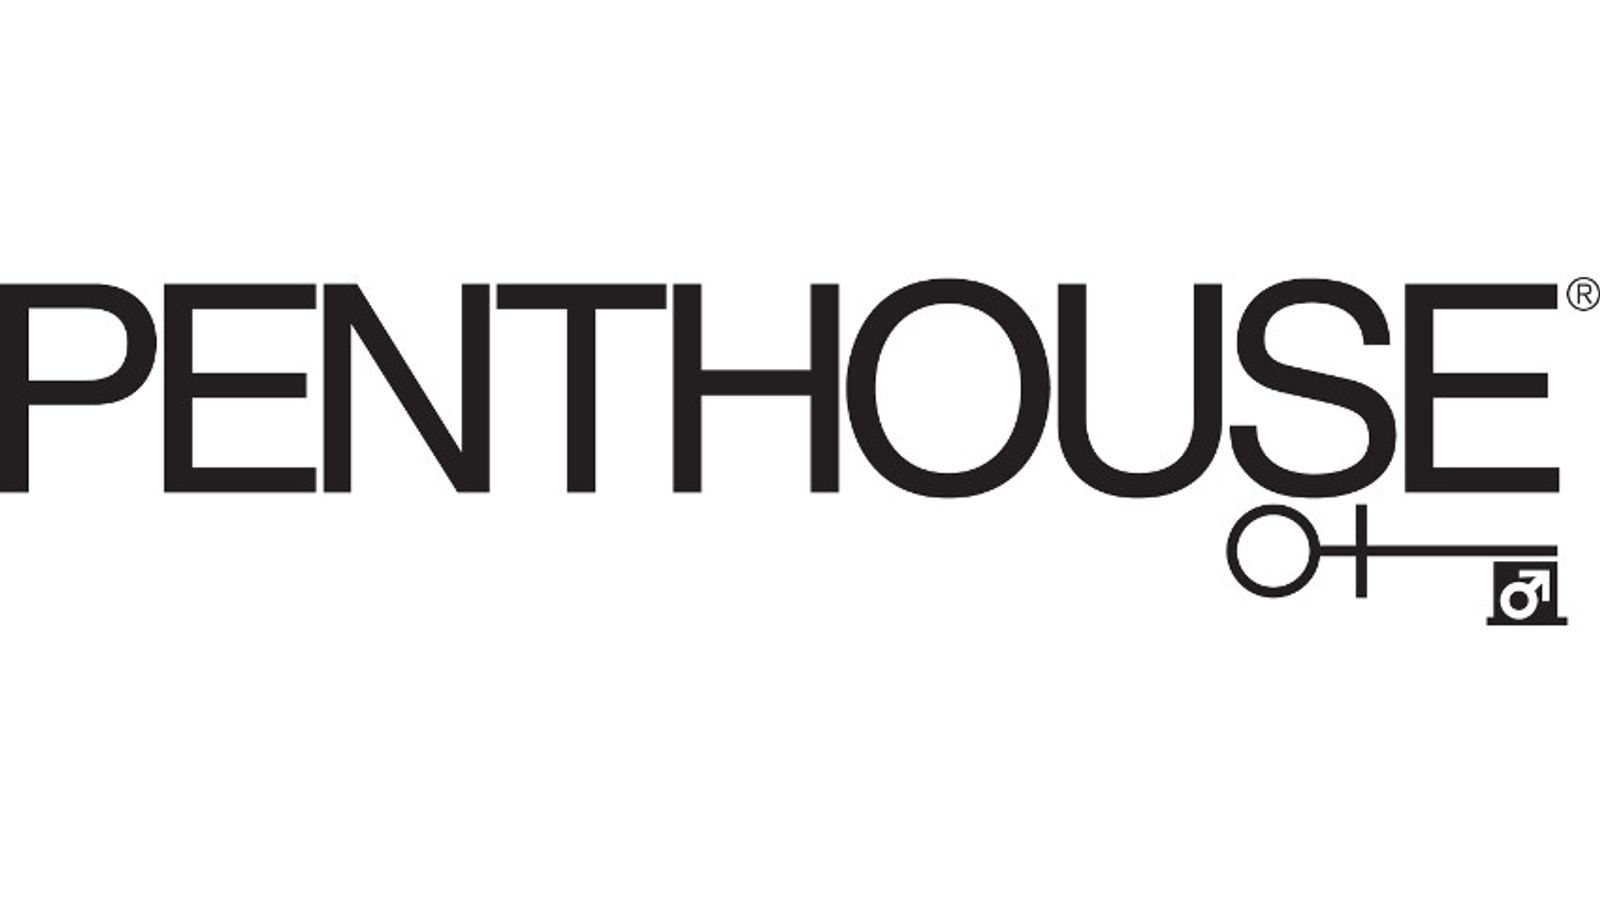 Penthouse Brings 'Penthouse Letters' Online